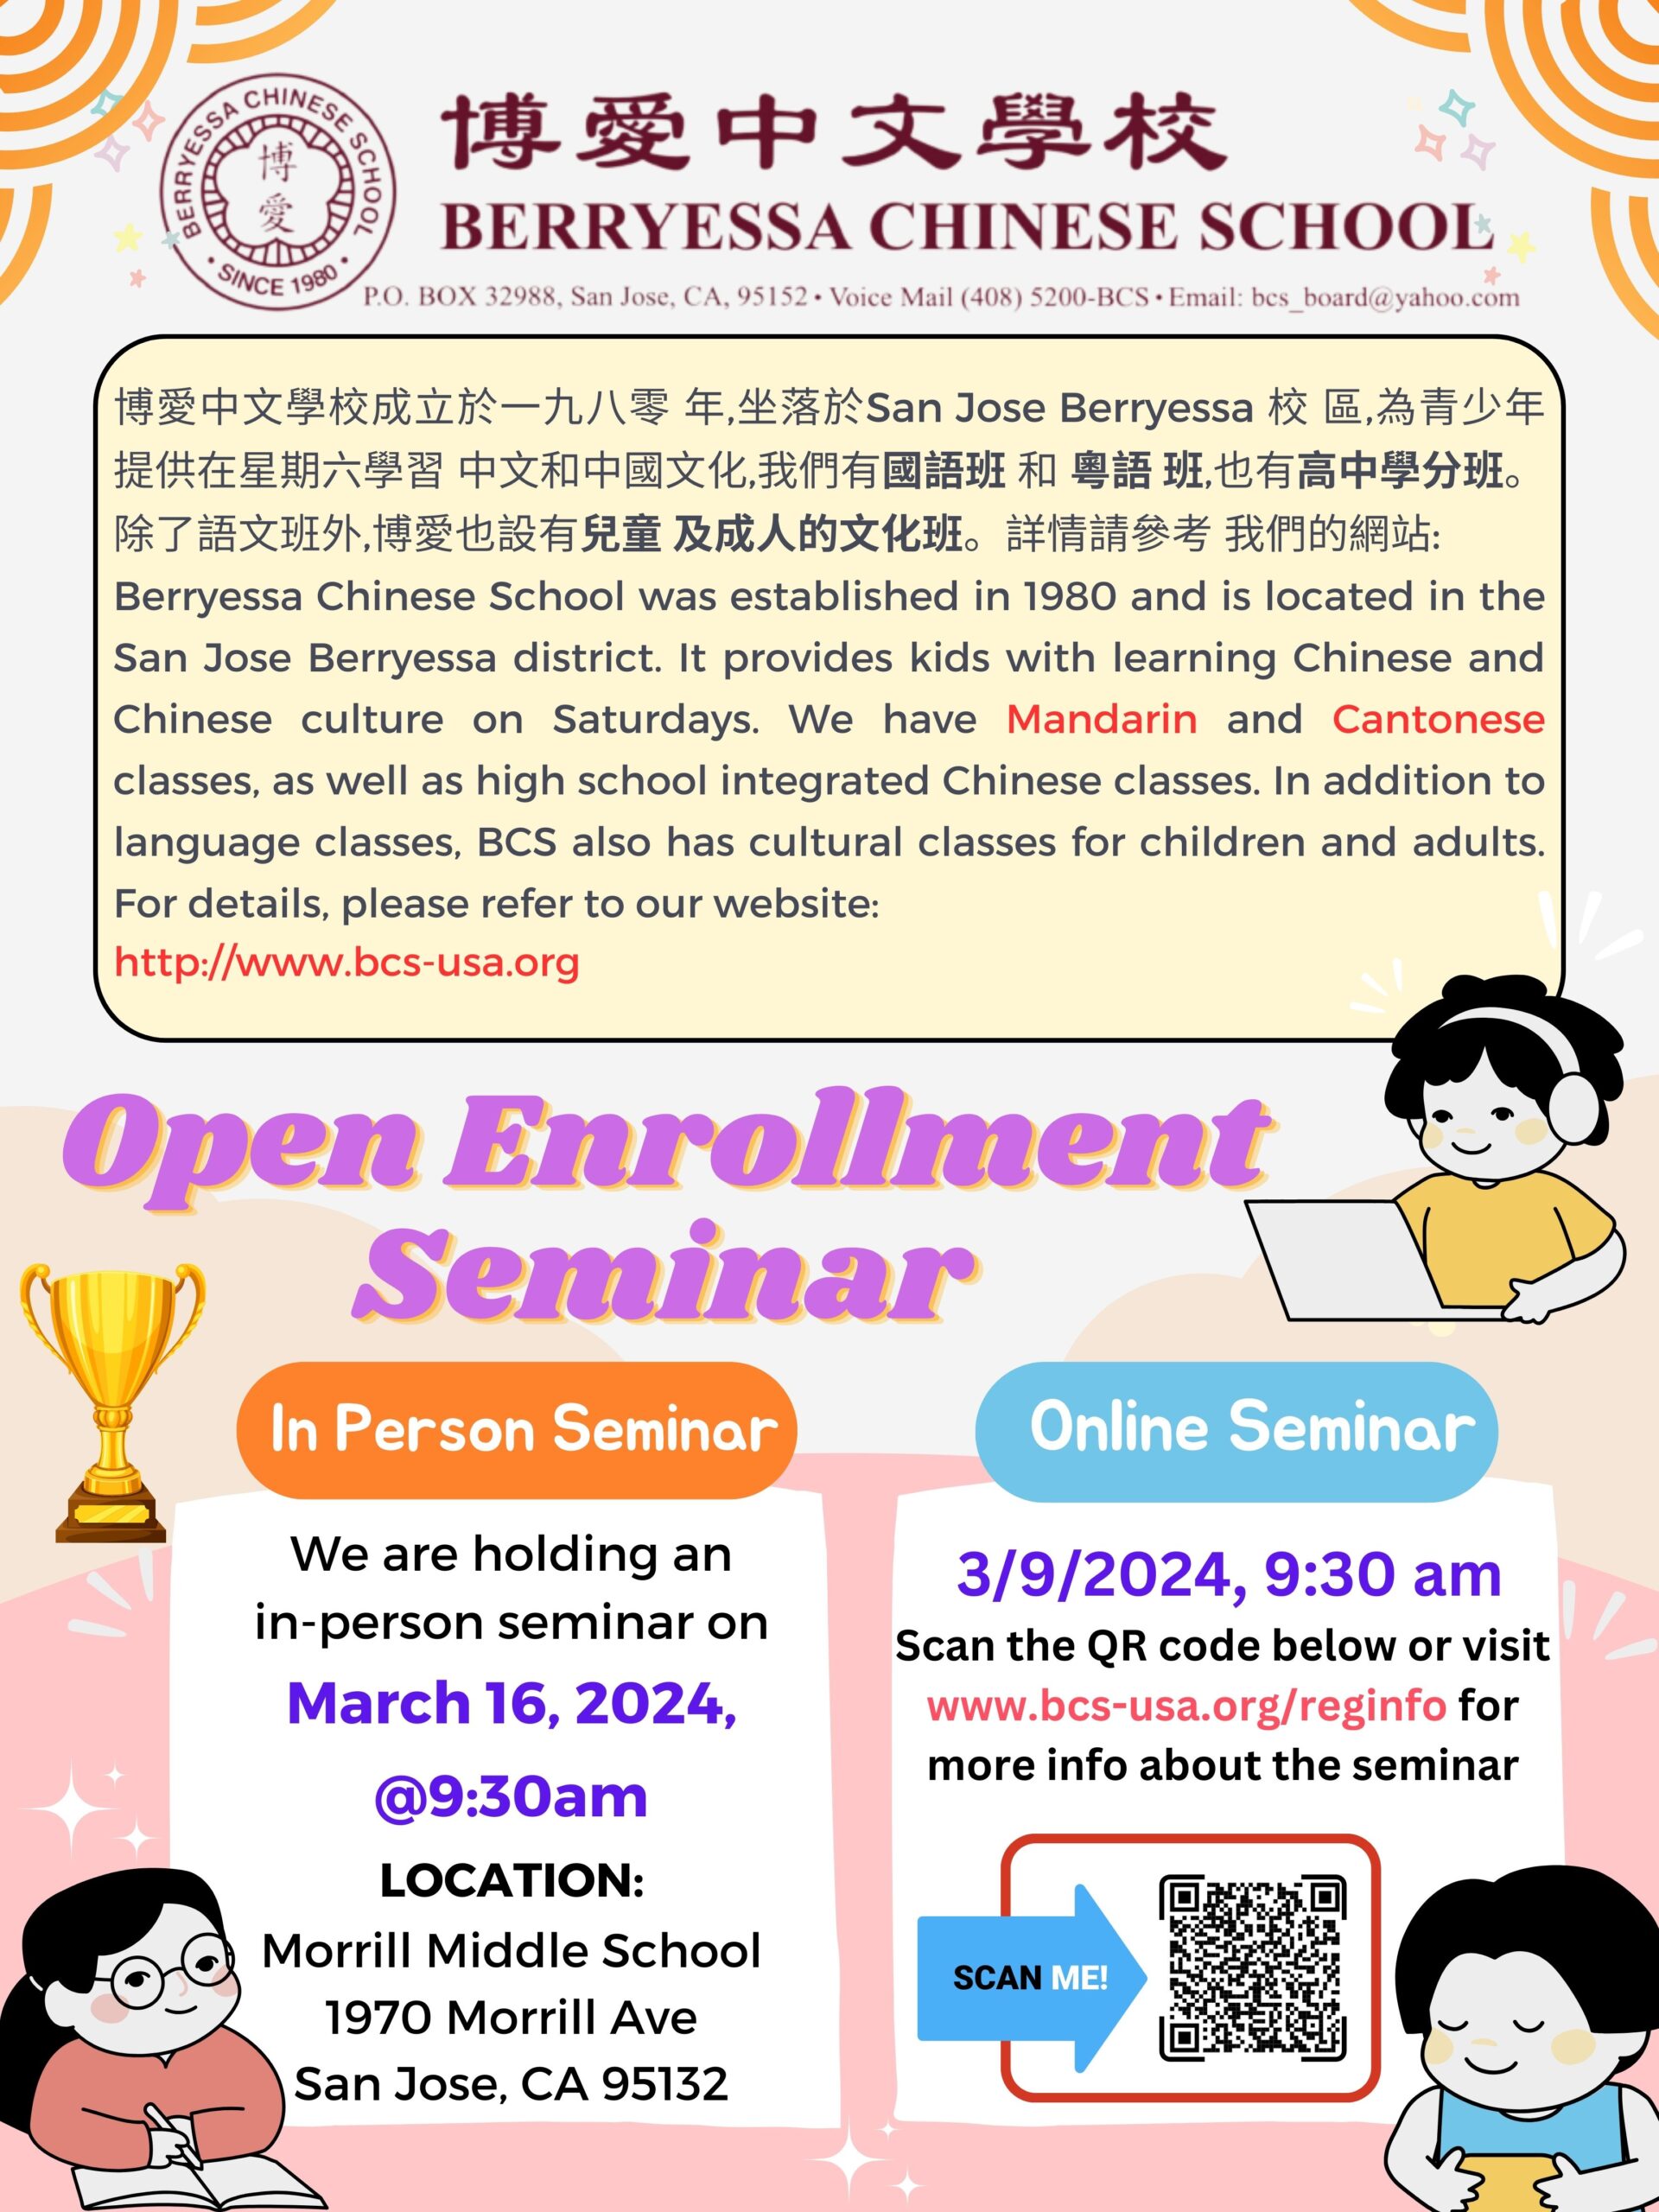 Open Enrollment Seminar